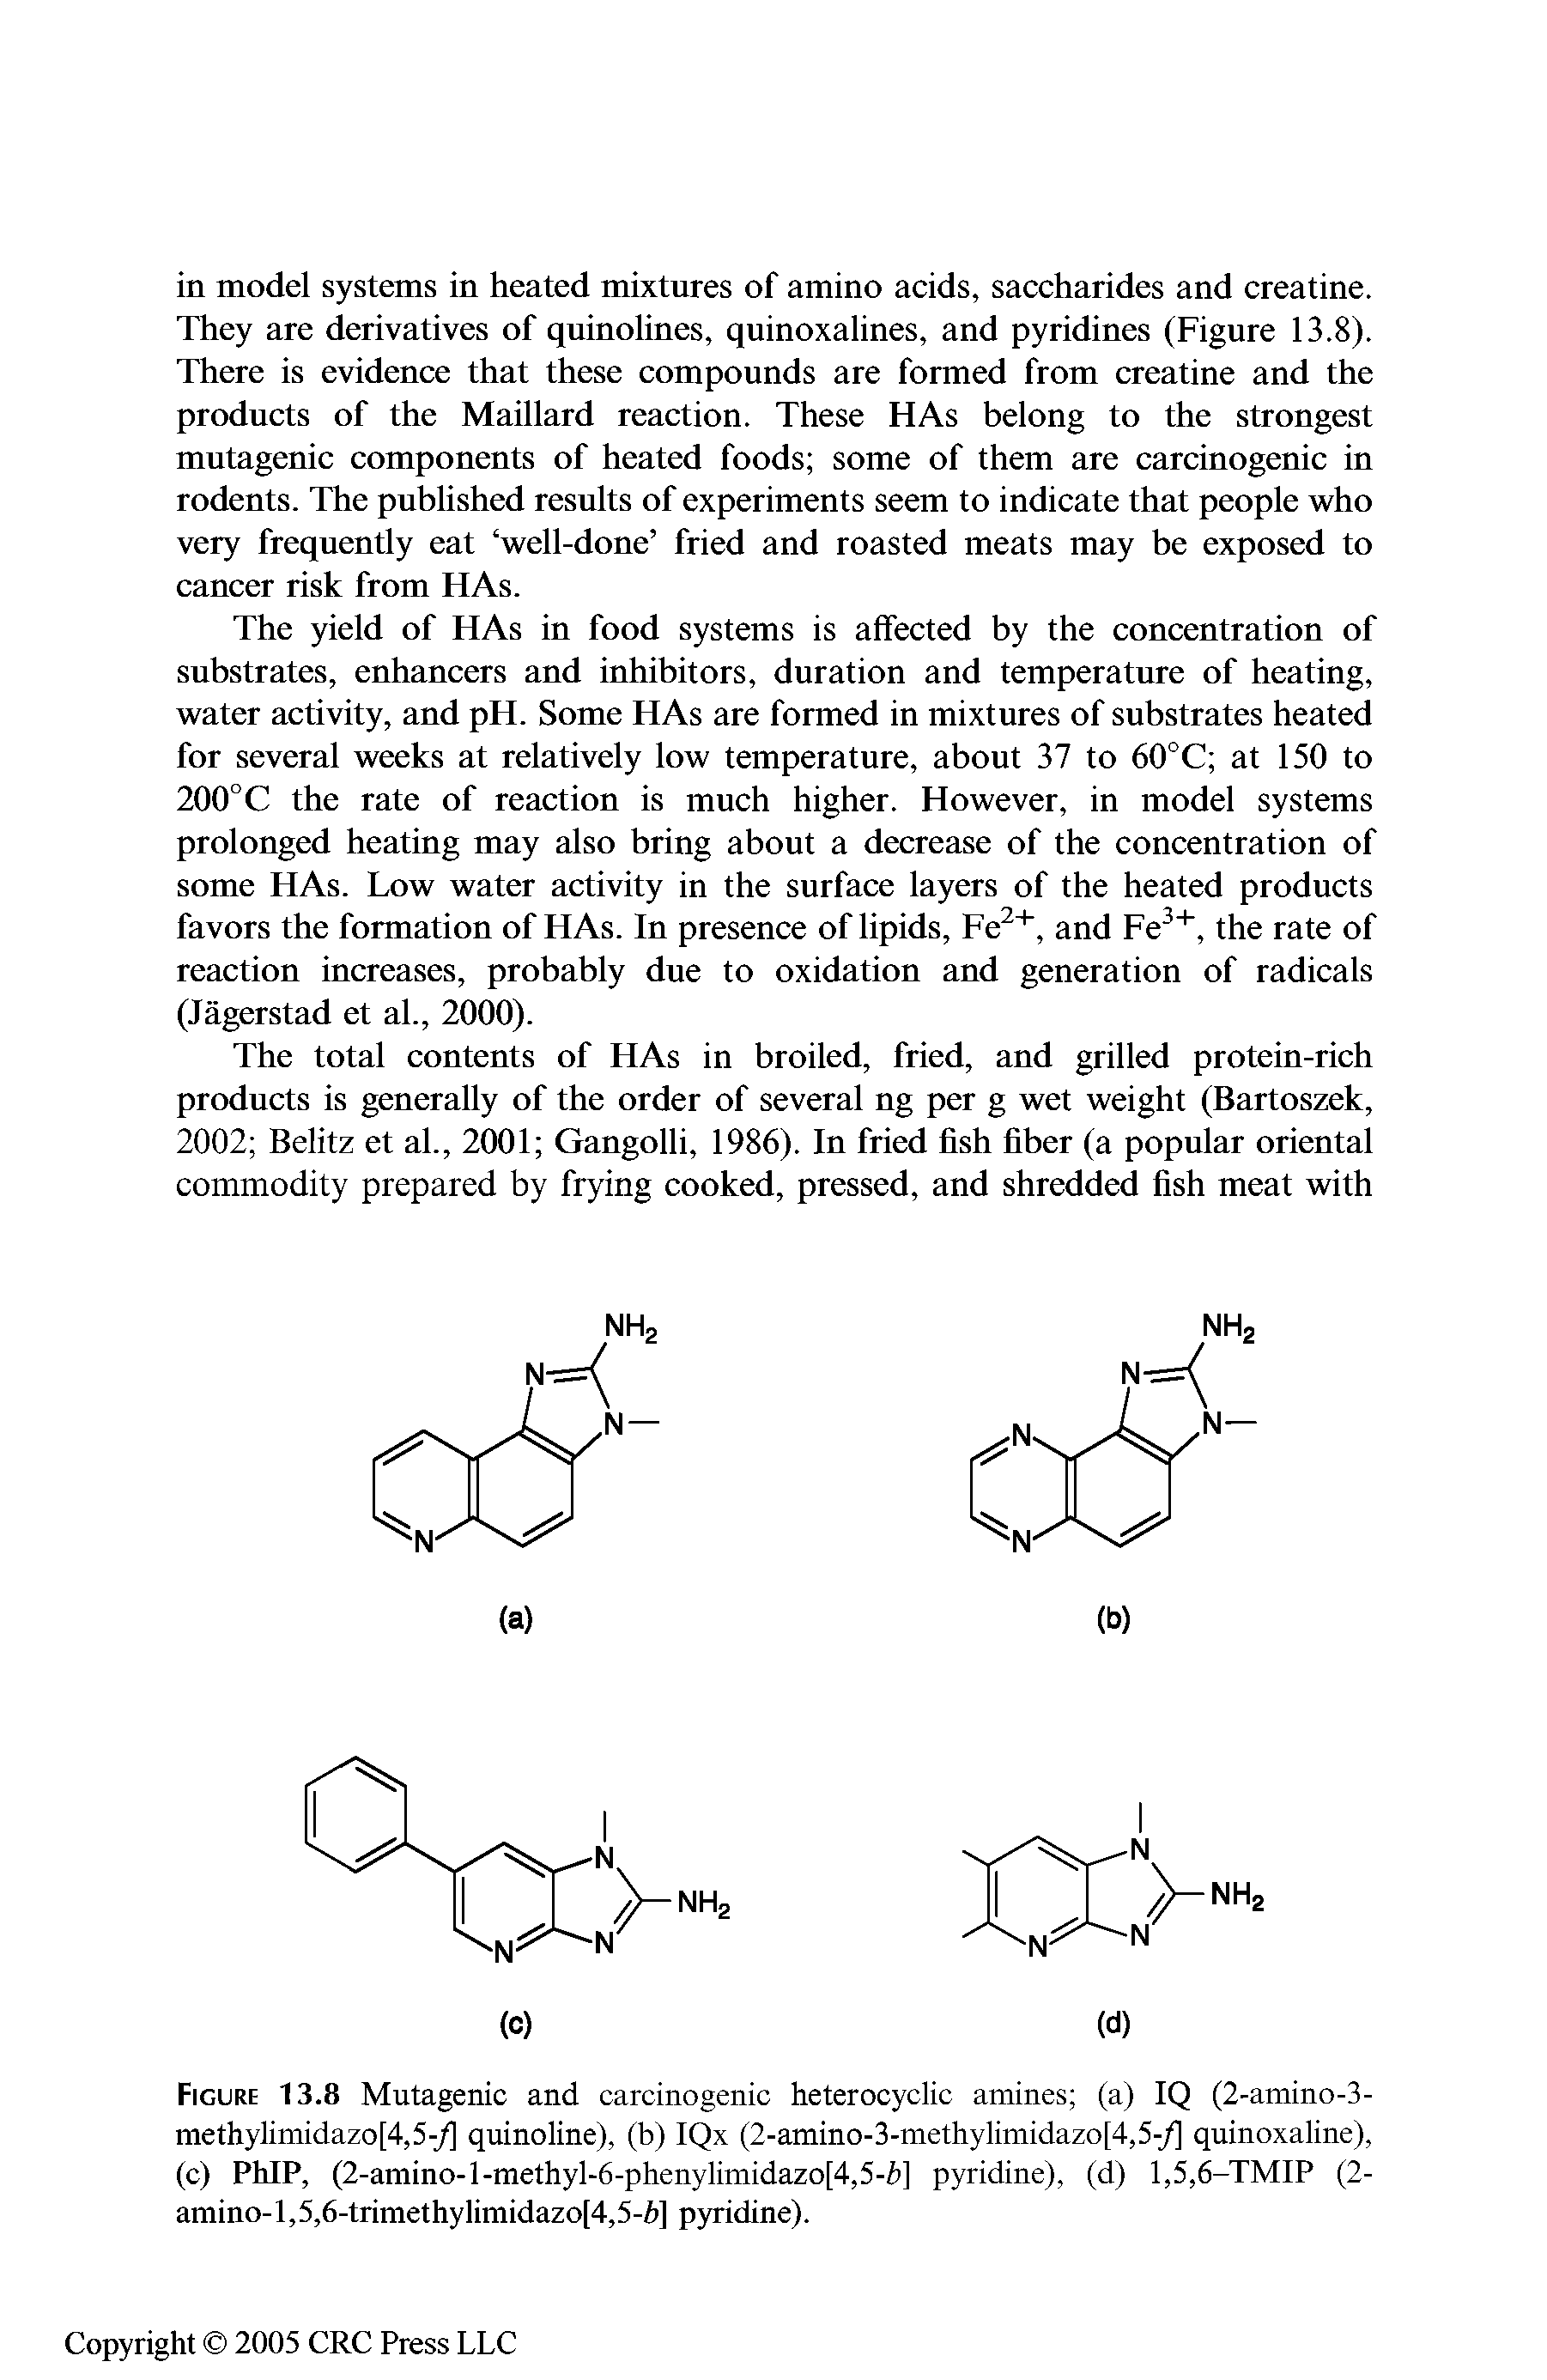 Figure 13.8 Mutagenic and carcinogenic heterocyclic amines (a) IQ (2-amino-3-methylimidazo[4,5-/ quinoline), (b) IQx (2-amino-3-methylimidazo[4,5-/ quinoxaline), (c) PhIP, (2-amino-l-methyl-6-phenylimidazo[4,5- ] pyridine), (d) 1,5,6-TMIP (2-amino-l,5,6-trimethylimidazo[4,5-6] p5ridine).